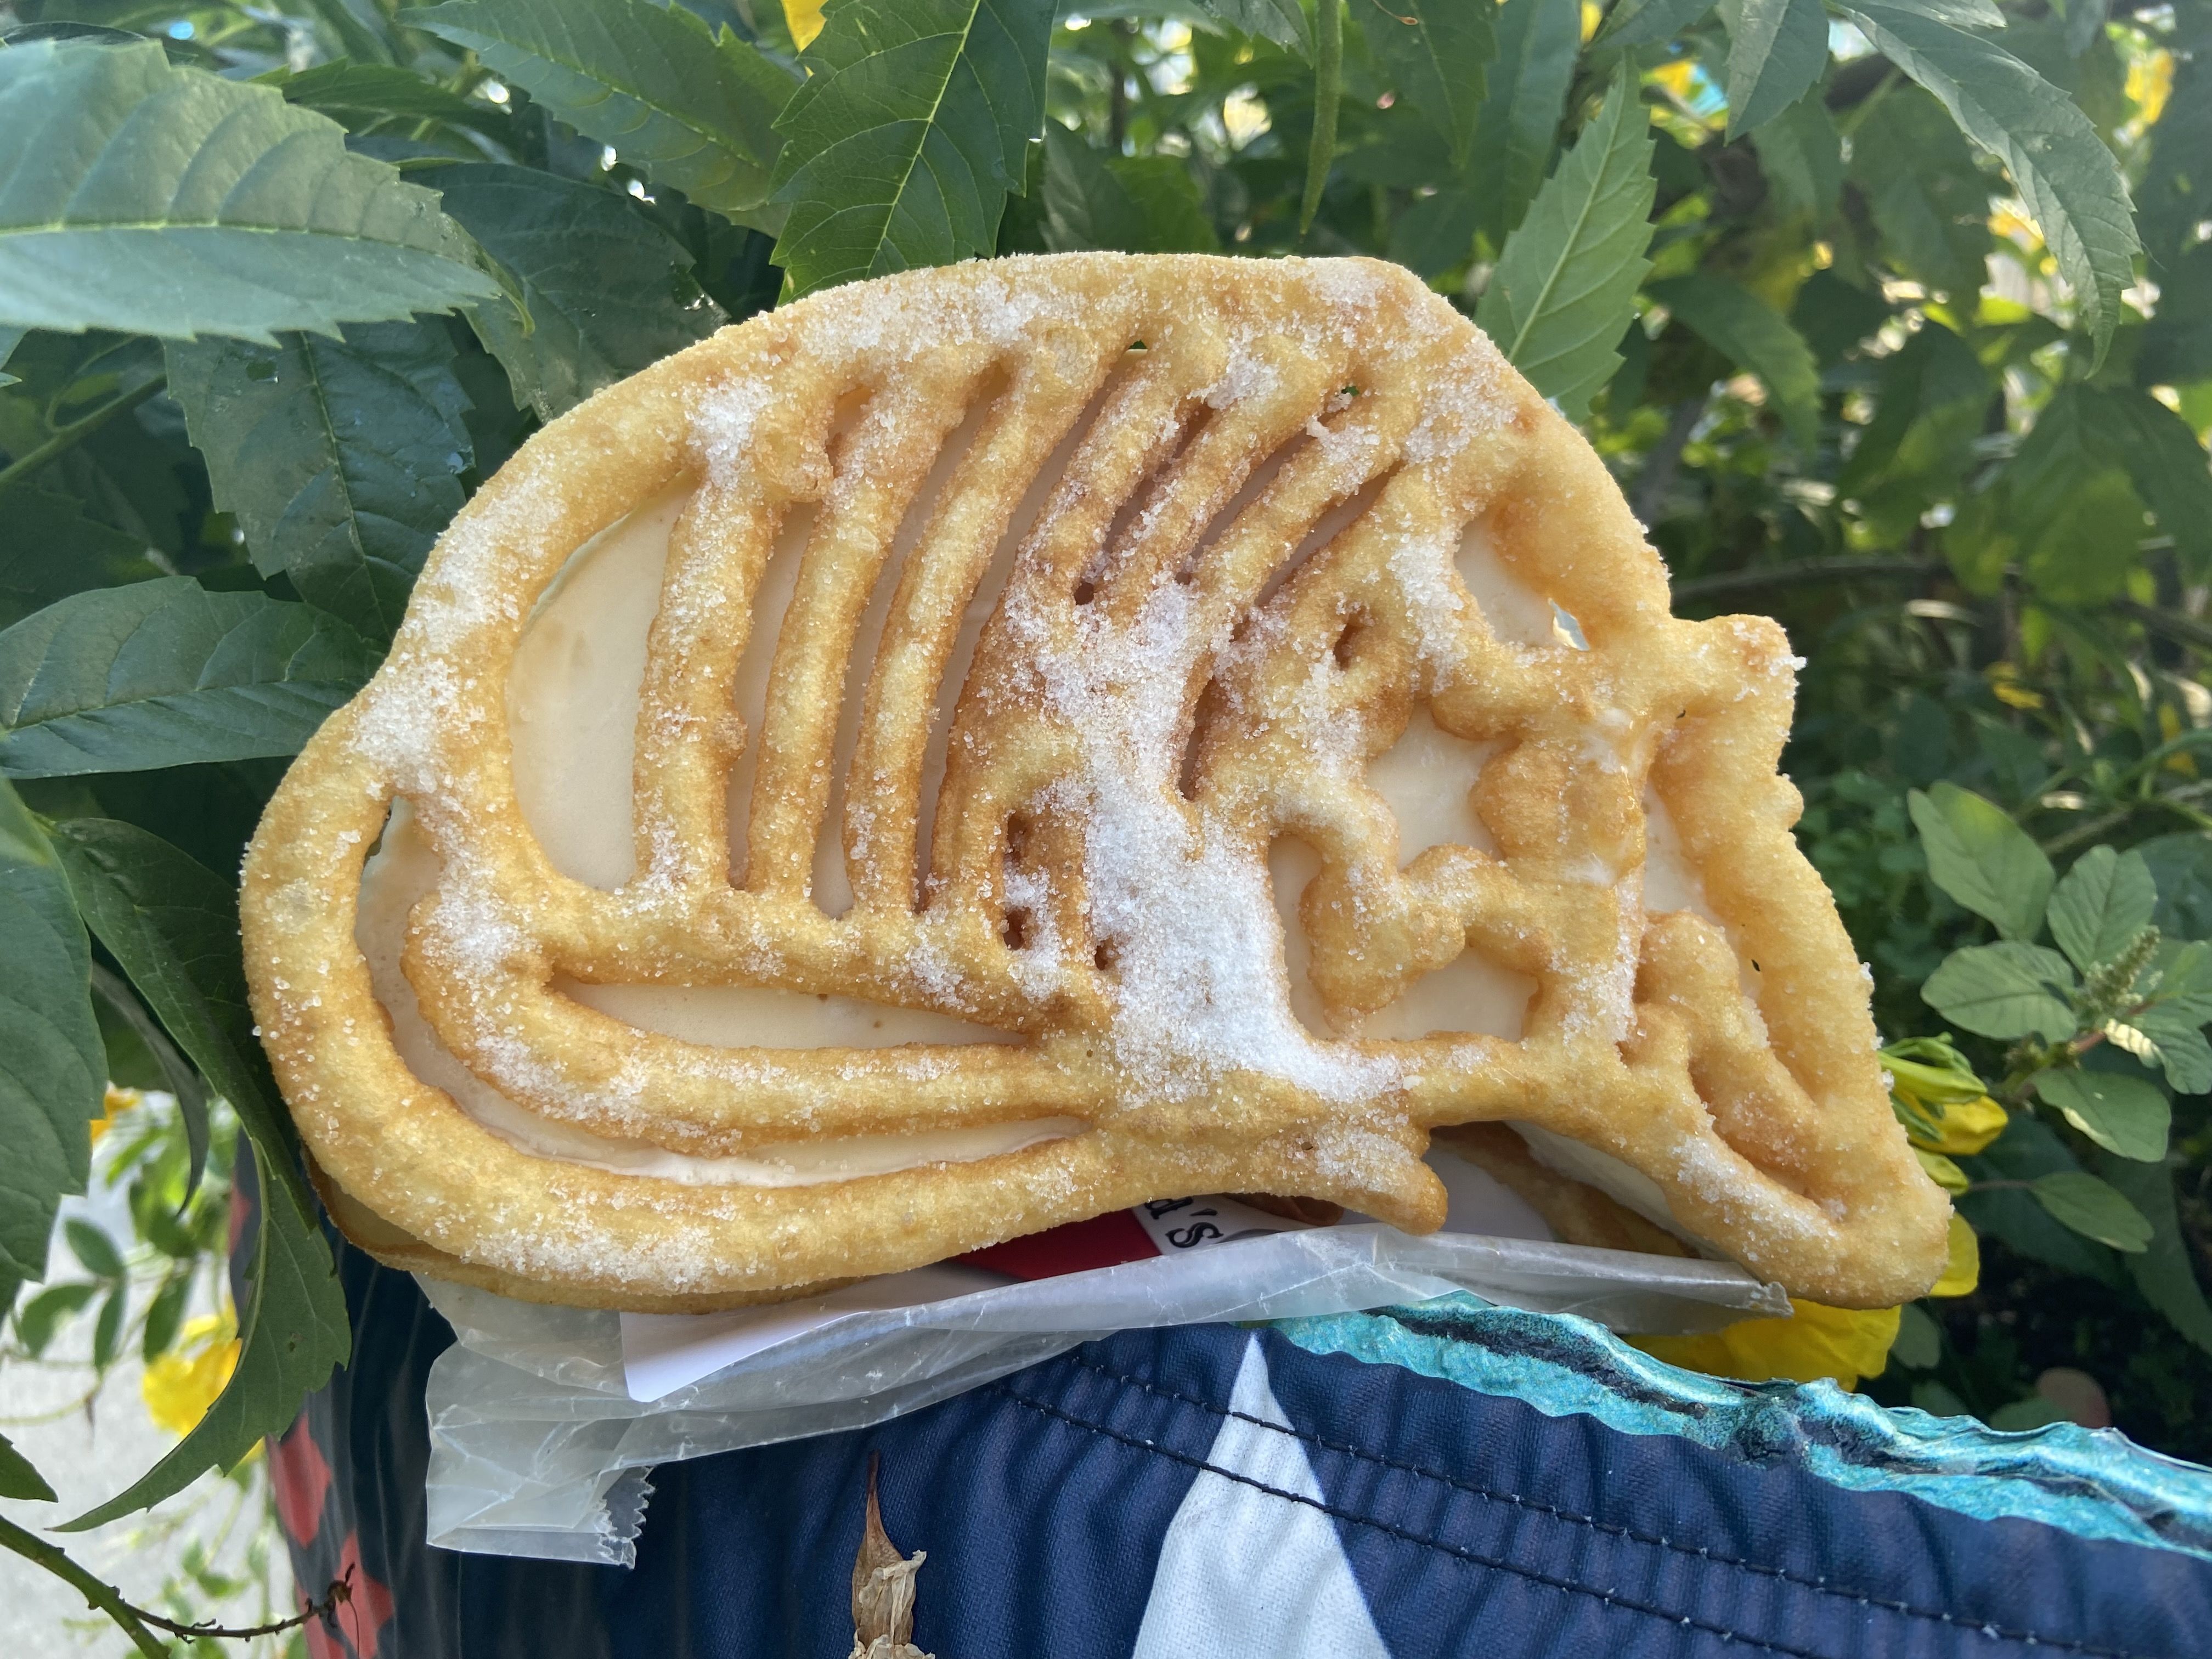 Golden fried armadillo shaped ice cream sandwich